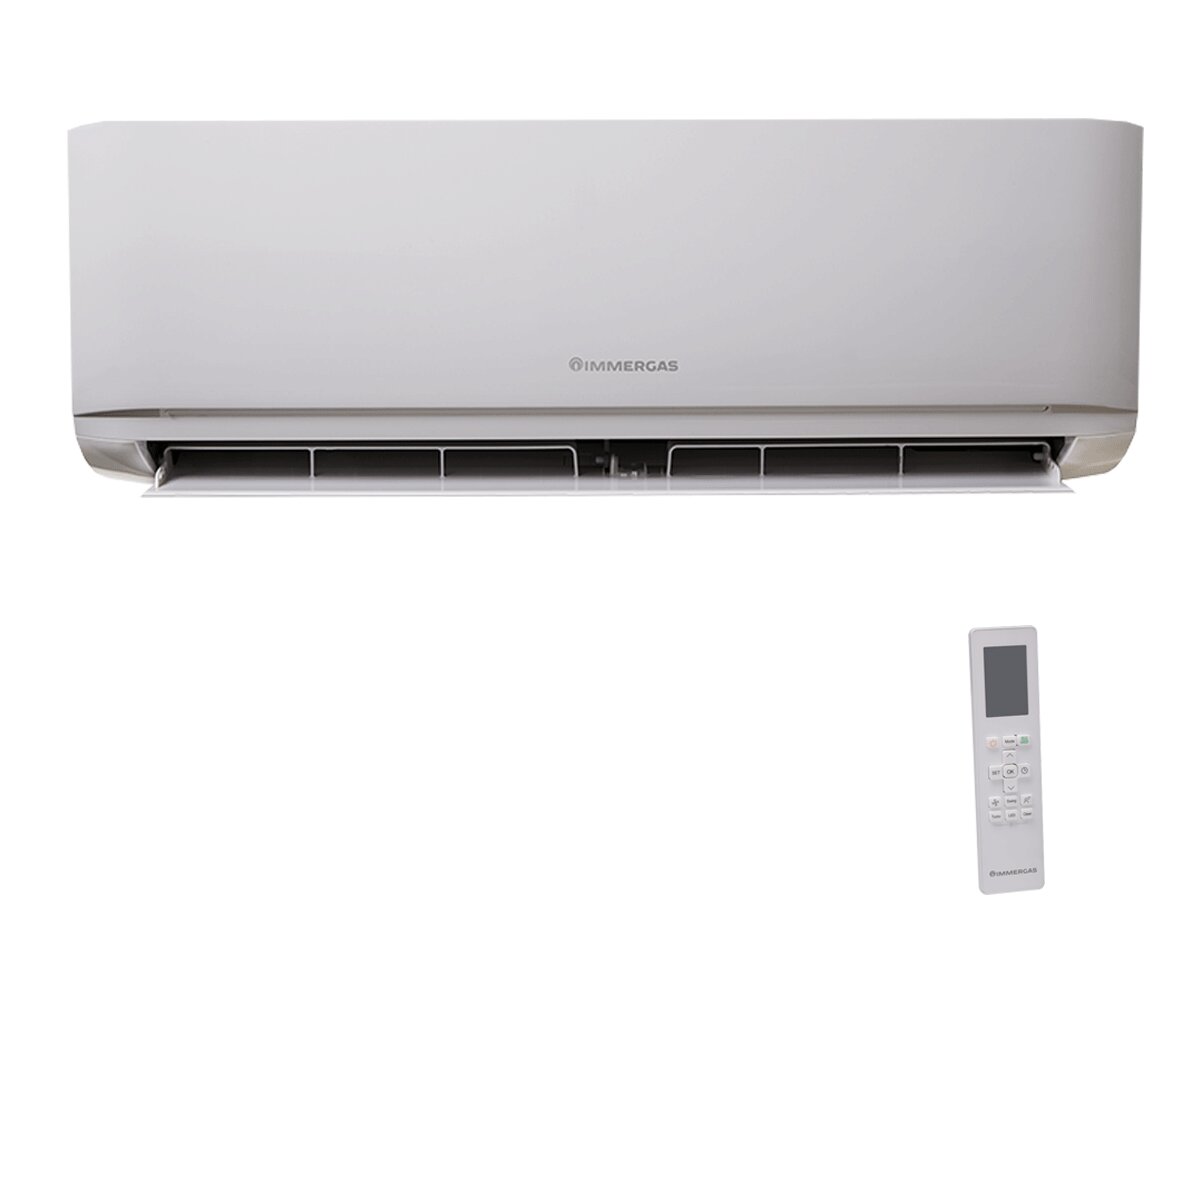 Immergas THOR 9000 BTU R32 Inverter Air Conditioner A++/A+